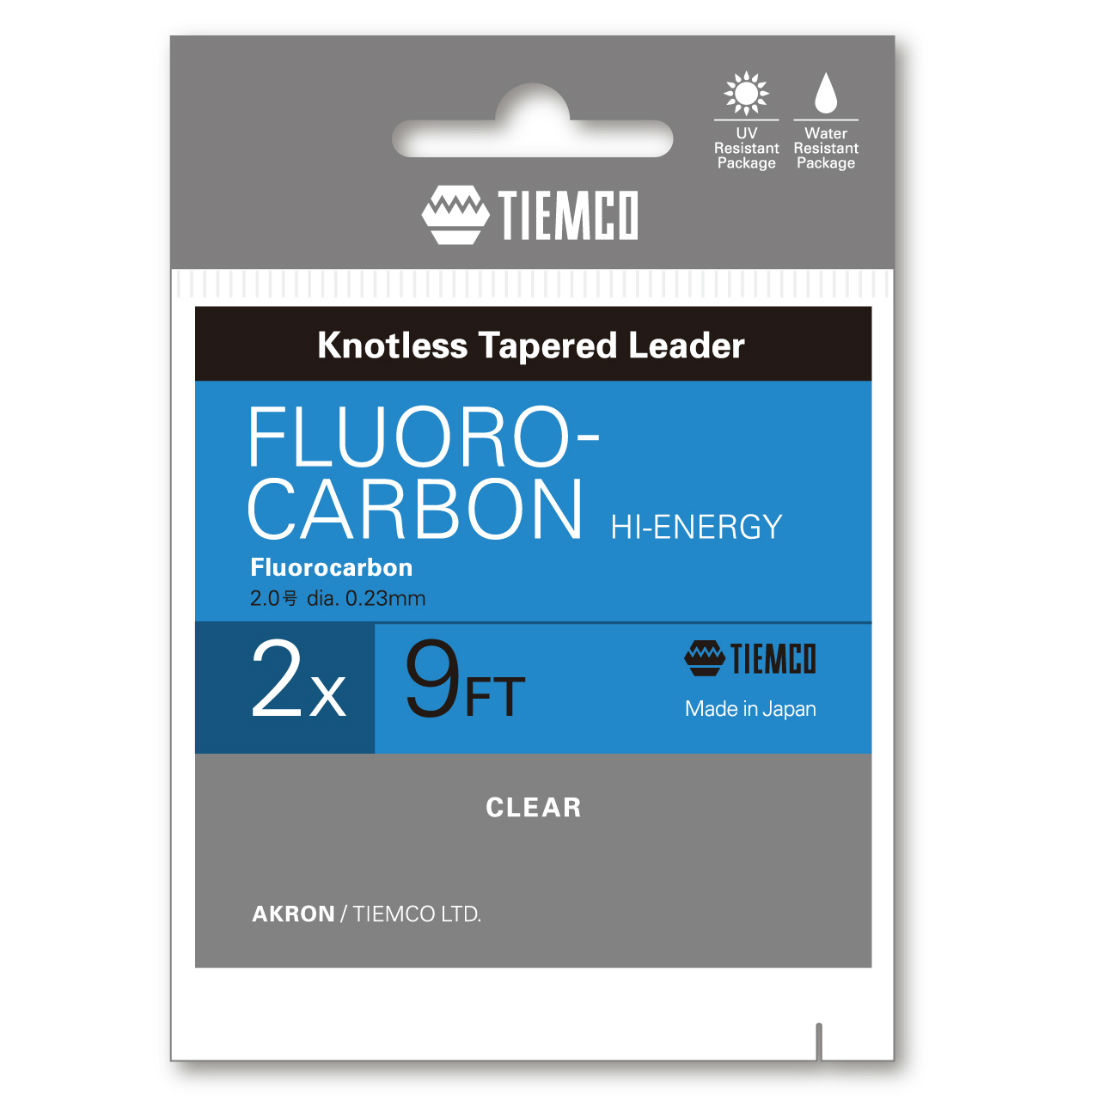 INAINTAS FLY TIEMCO FLUOROCARBON HI-ENERGY LEADER 9ft 5X